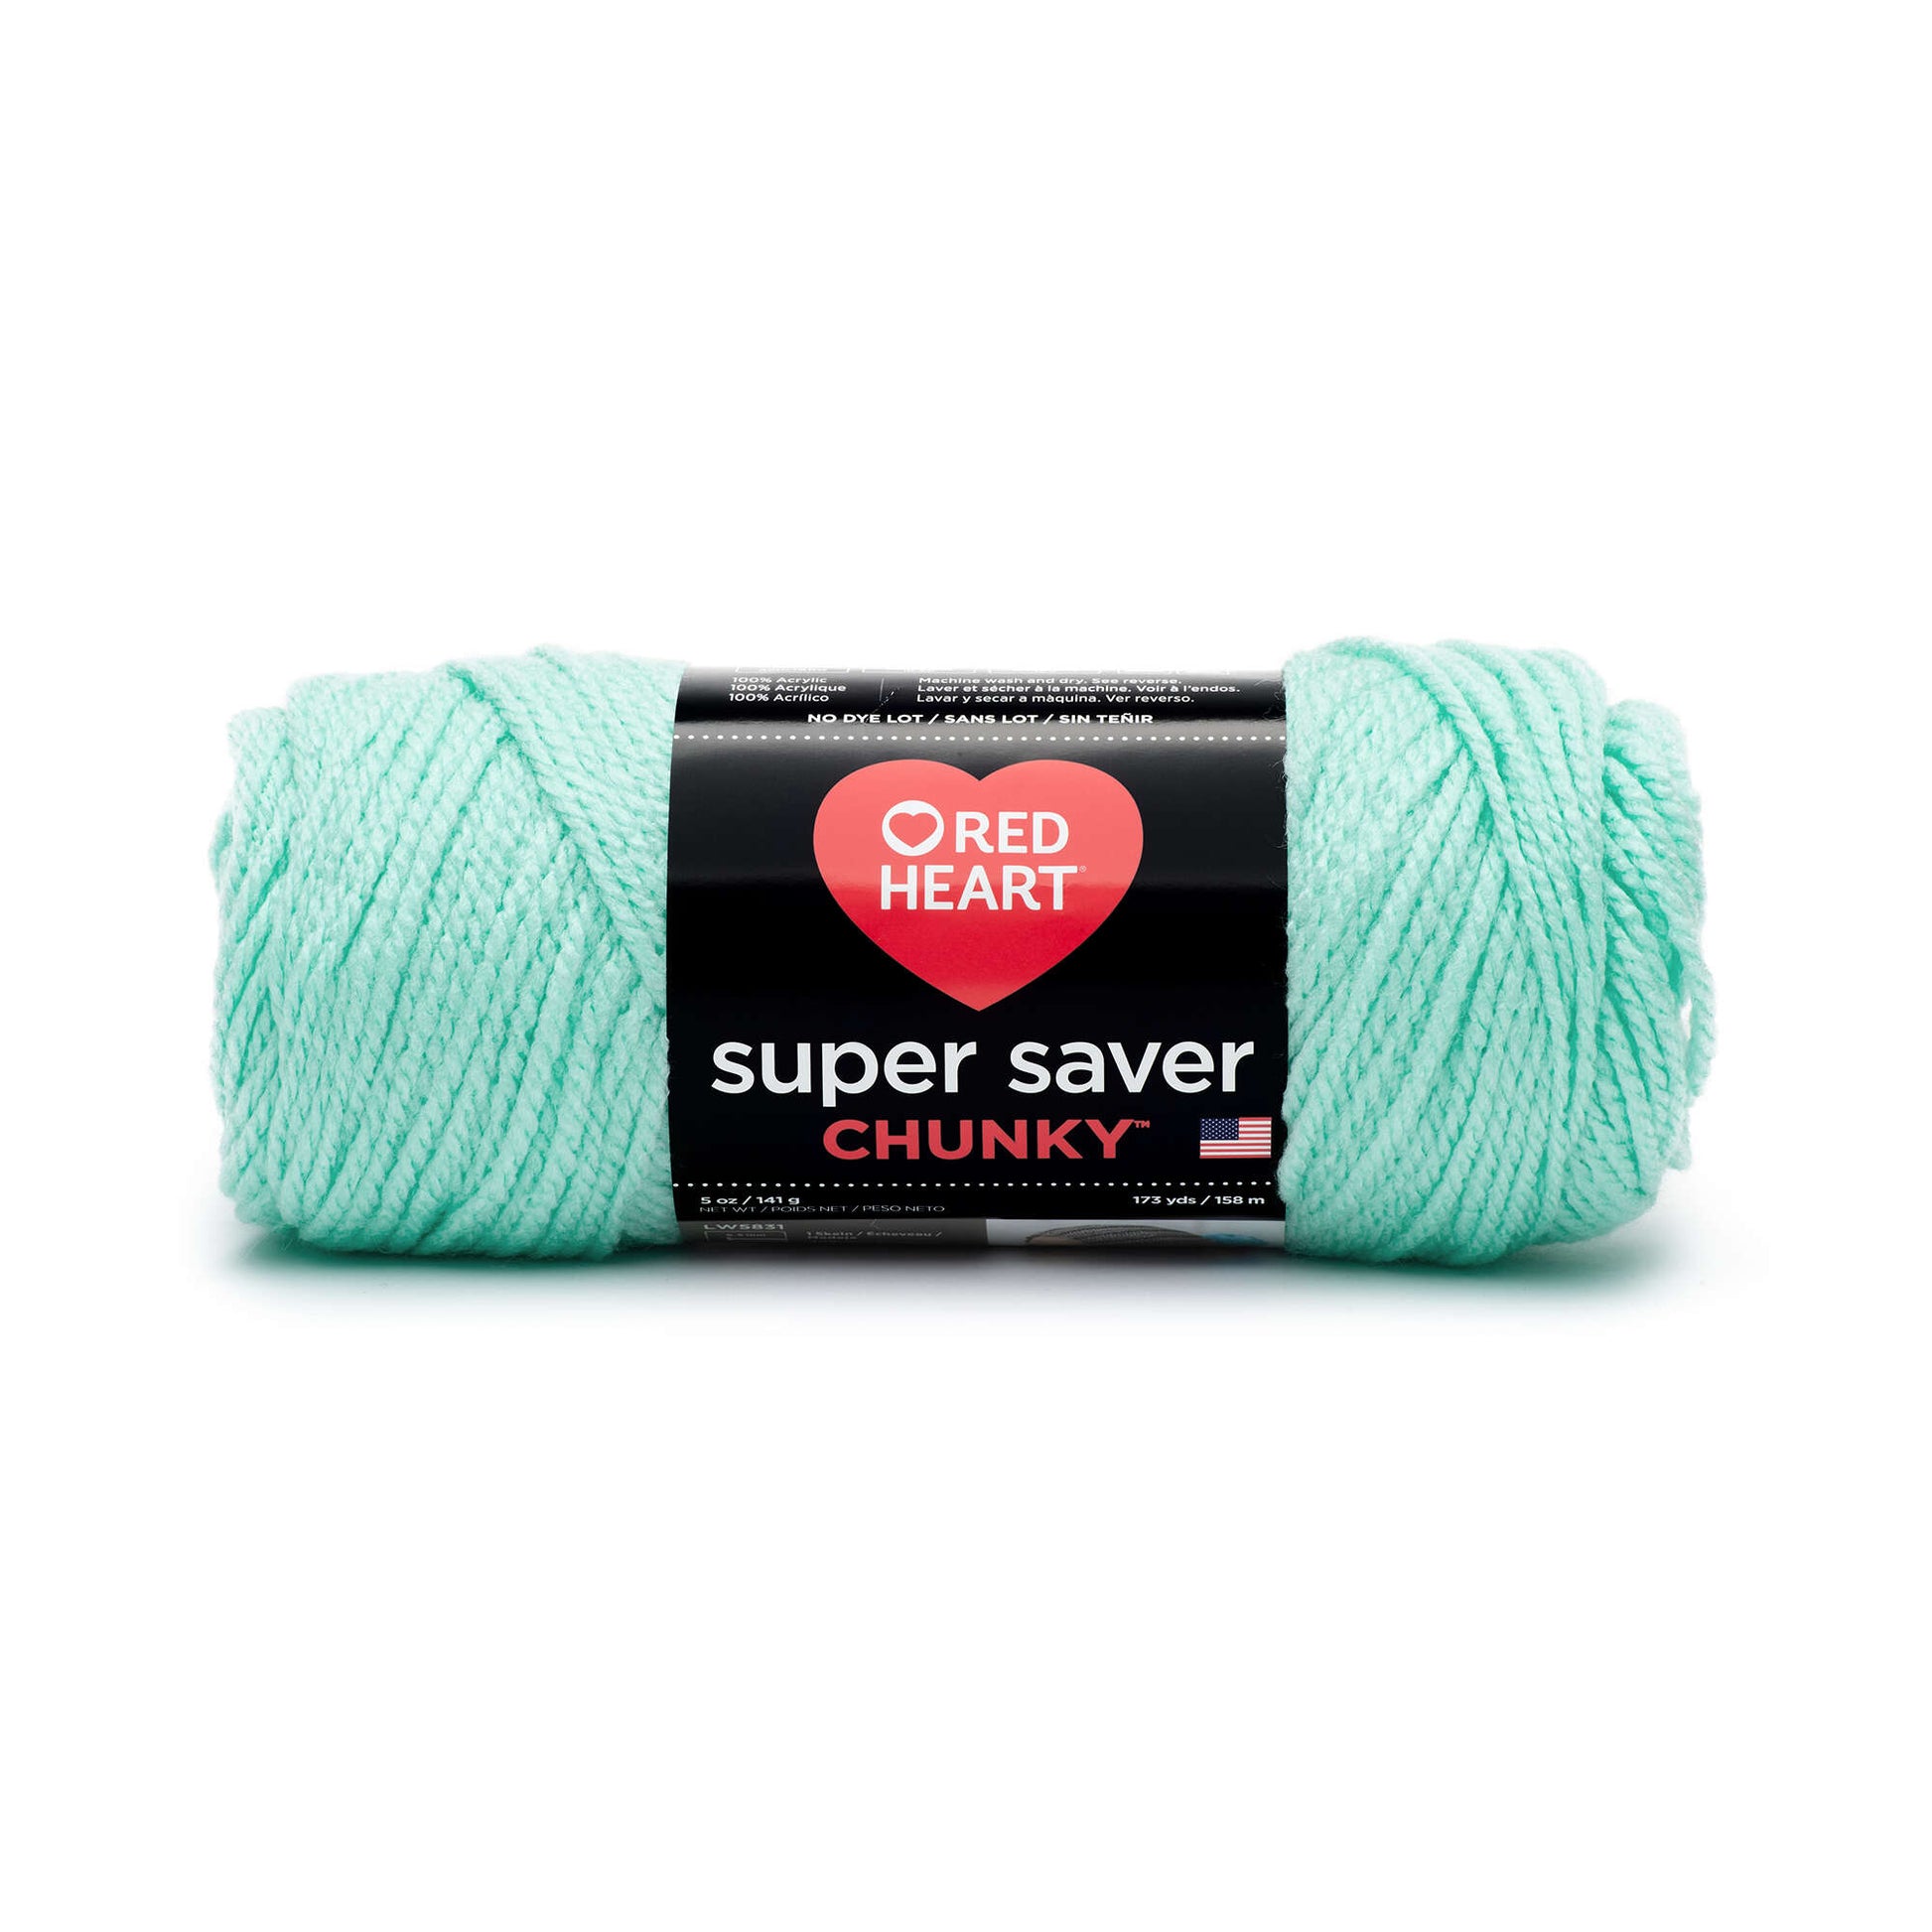 Red Heart Super Saver Chunky Yarn - Clearance shades Minty